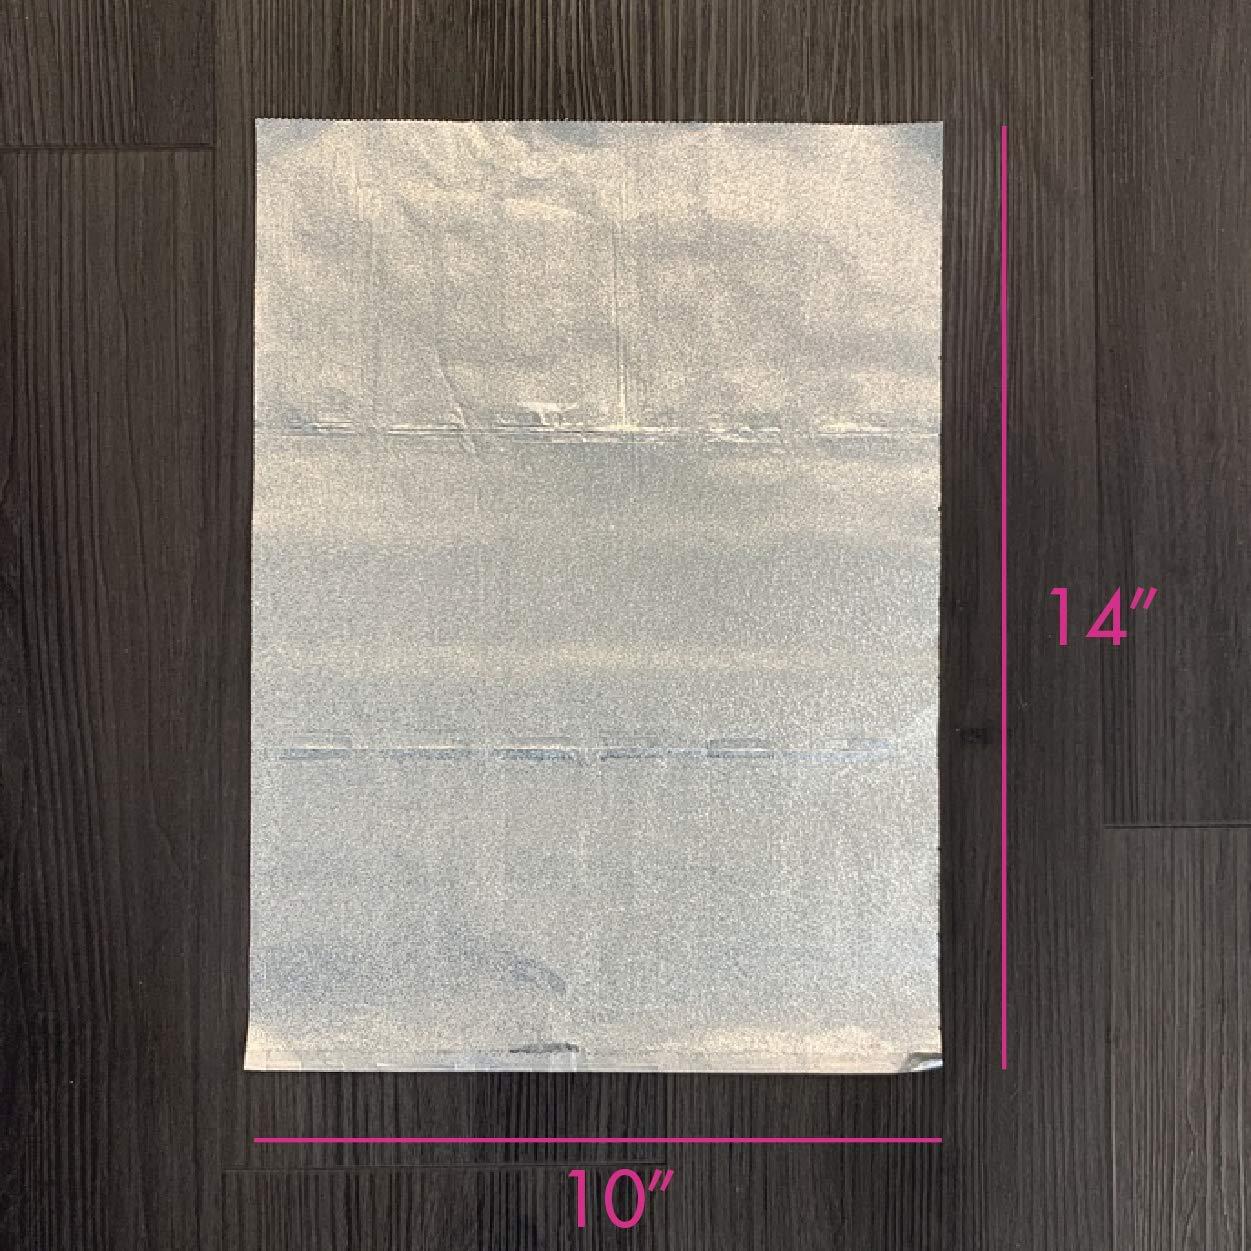 FRAMAR Star Struck Silver - Pop Up 500 sheets - 5x11 - pre-cut -  pre-folded foil